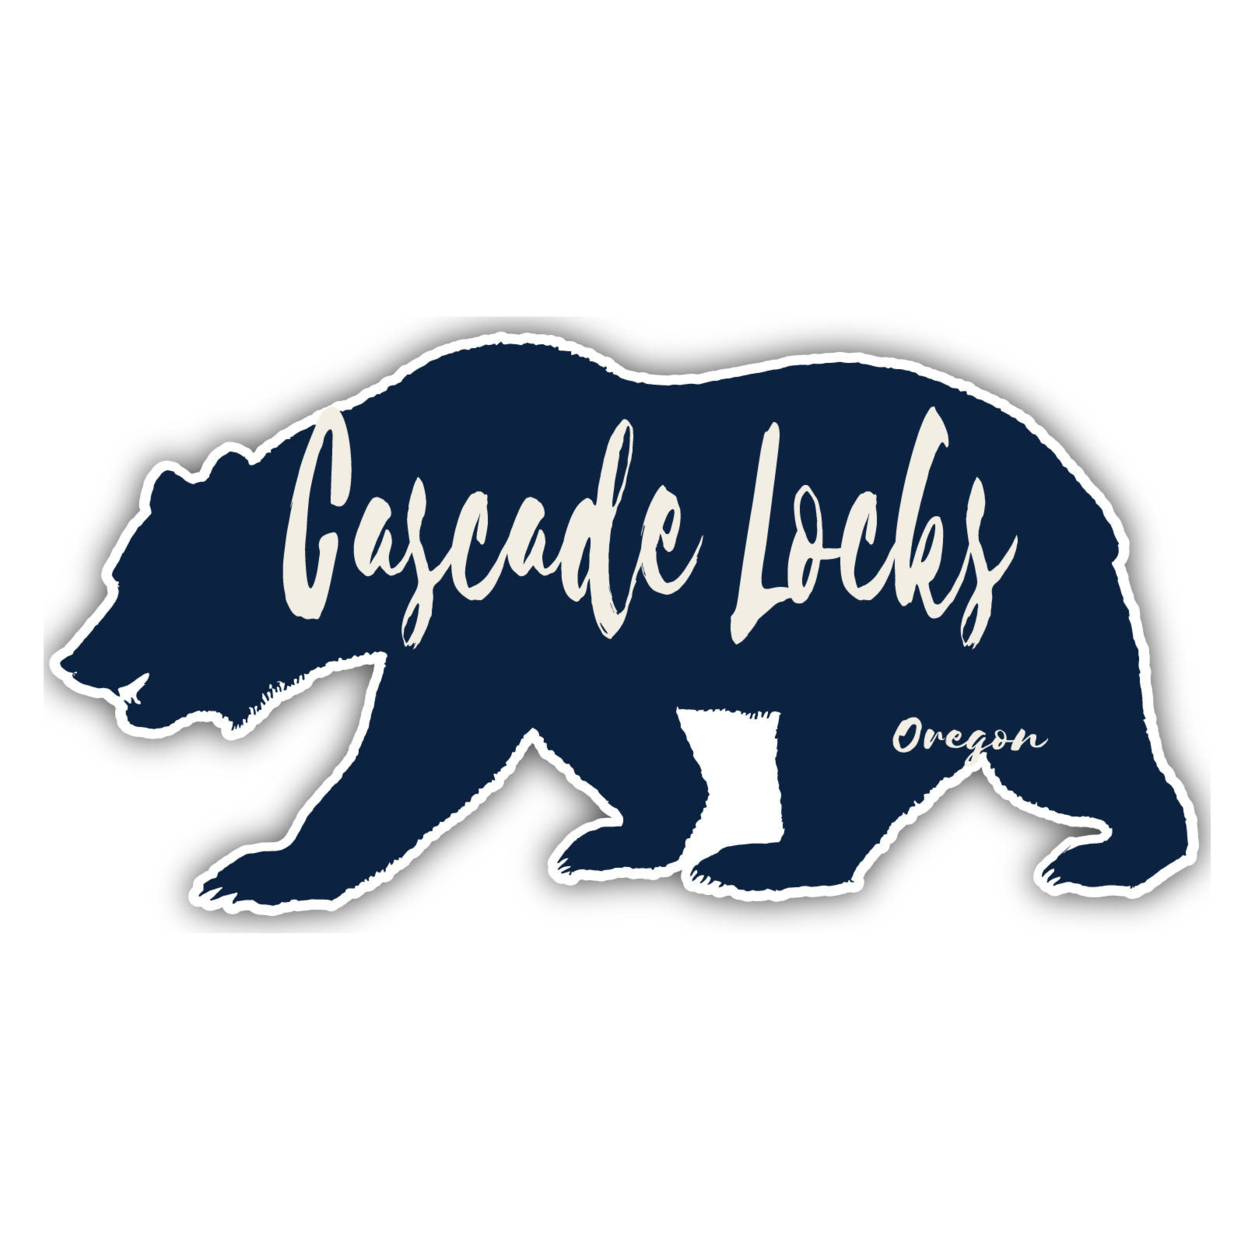 Cascade Locks Oregon Souvenir Decorative Stickers (Choose Theme And Size) - Single Unit, 6-Inch, Bear